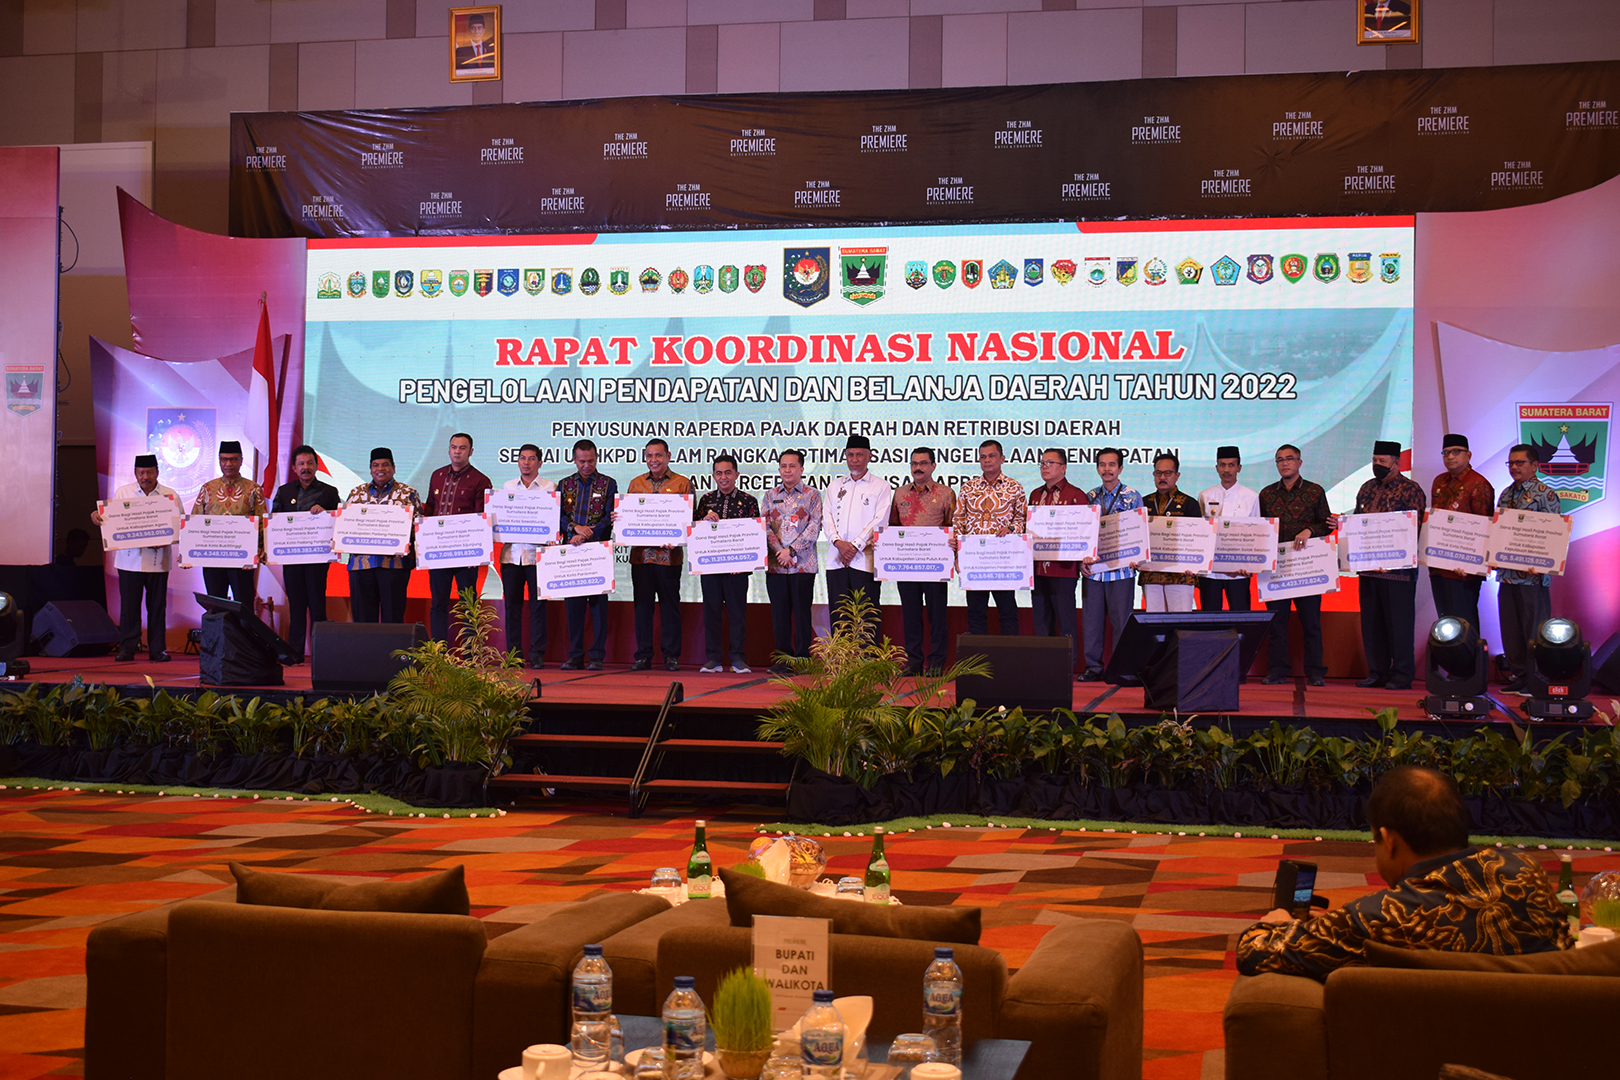 Dalam Rangka Pengelolaan Pendapatan dan Belanja Daerah, Kemendagri melaksanakan Rapat Koordinasi Nasional (Rakornas) se-Indonesia di Kota Padang. Sumatera Barat